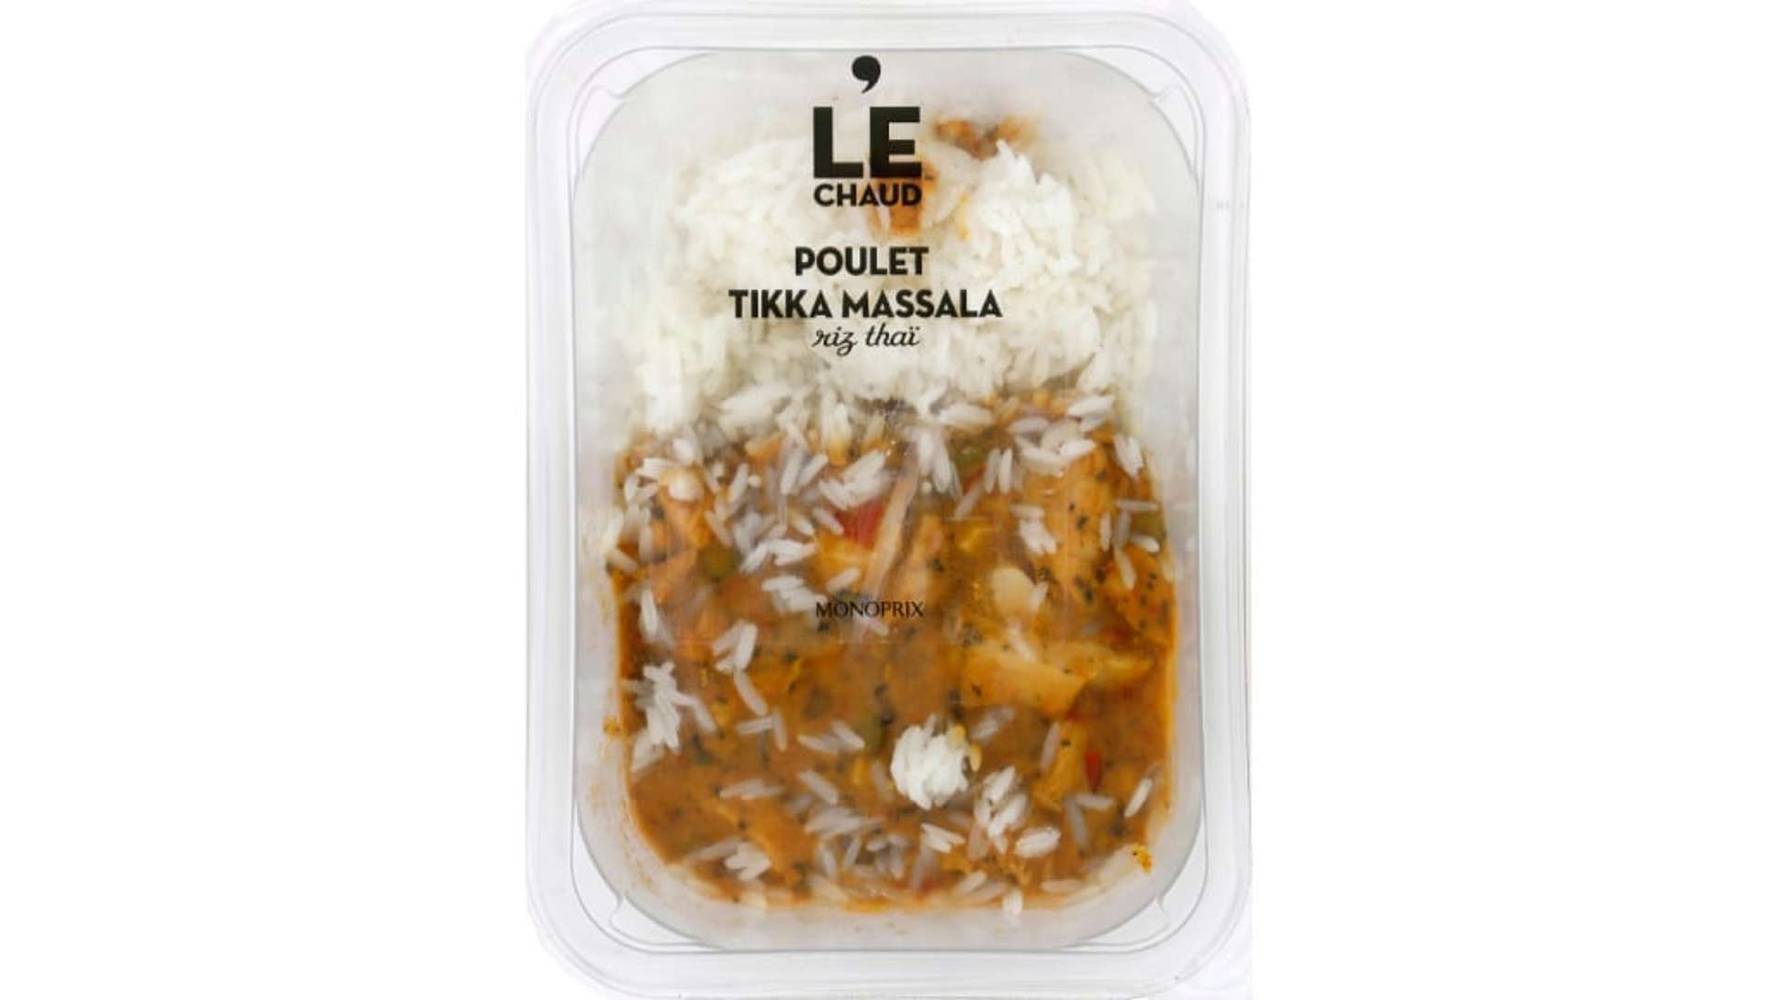 Monoprix Poulet tikka massala riz thai La portion de 300g